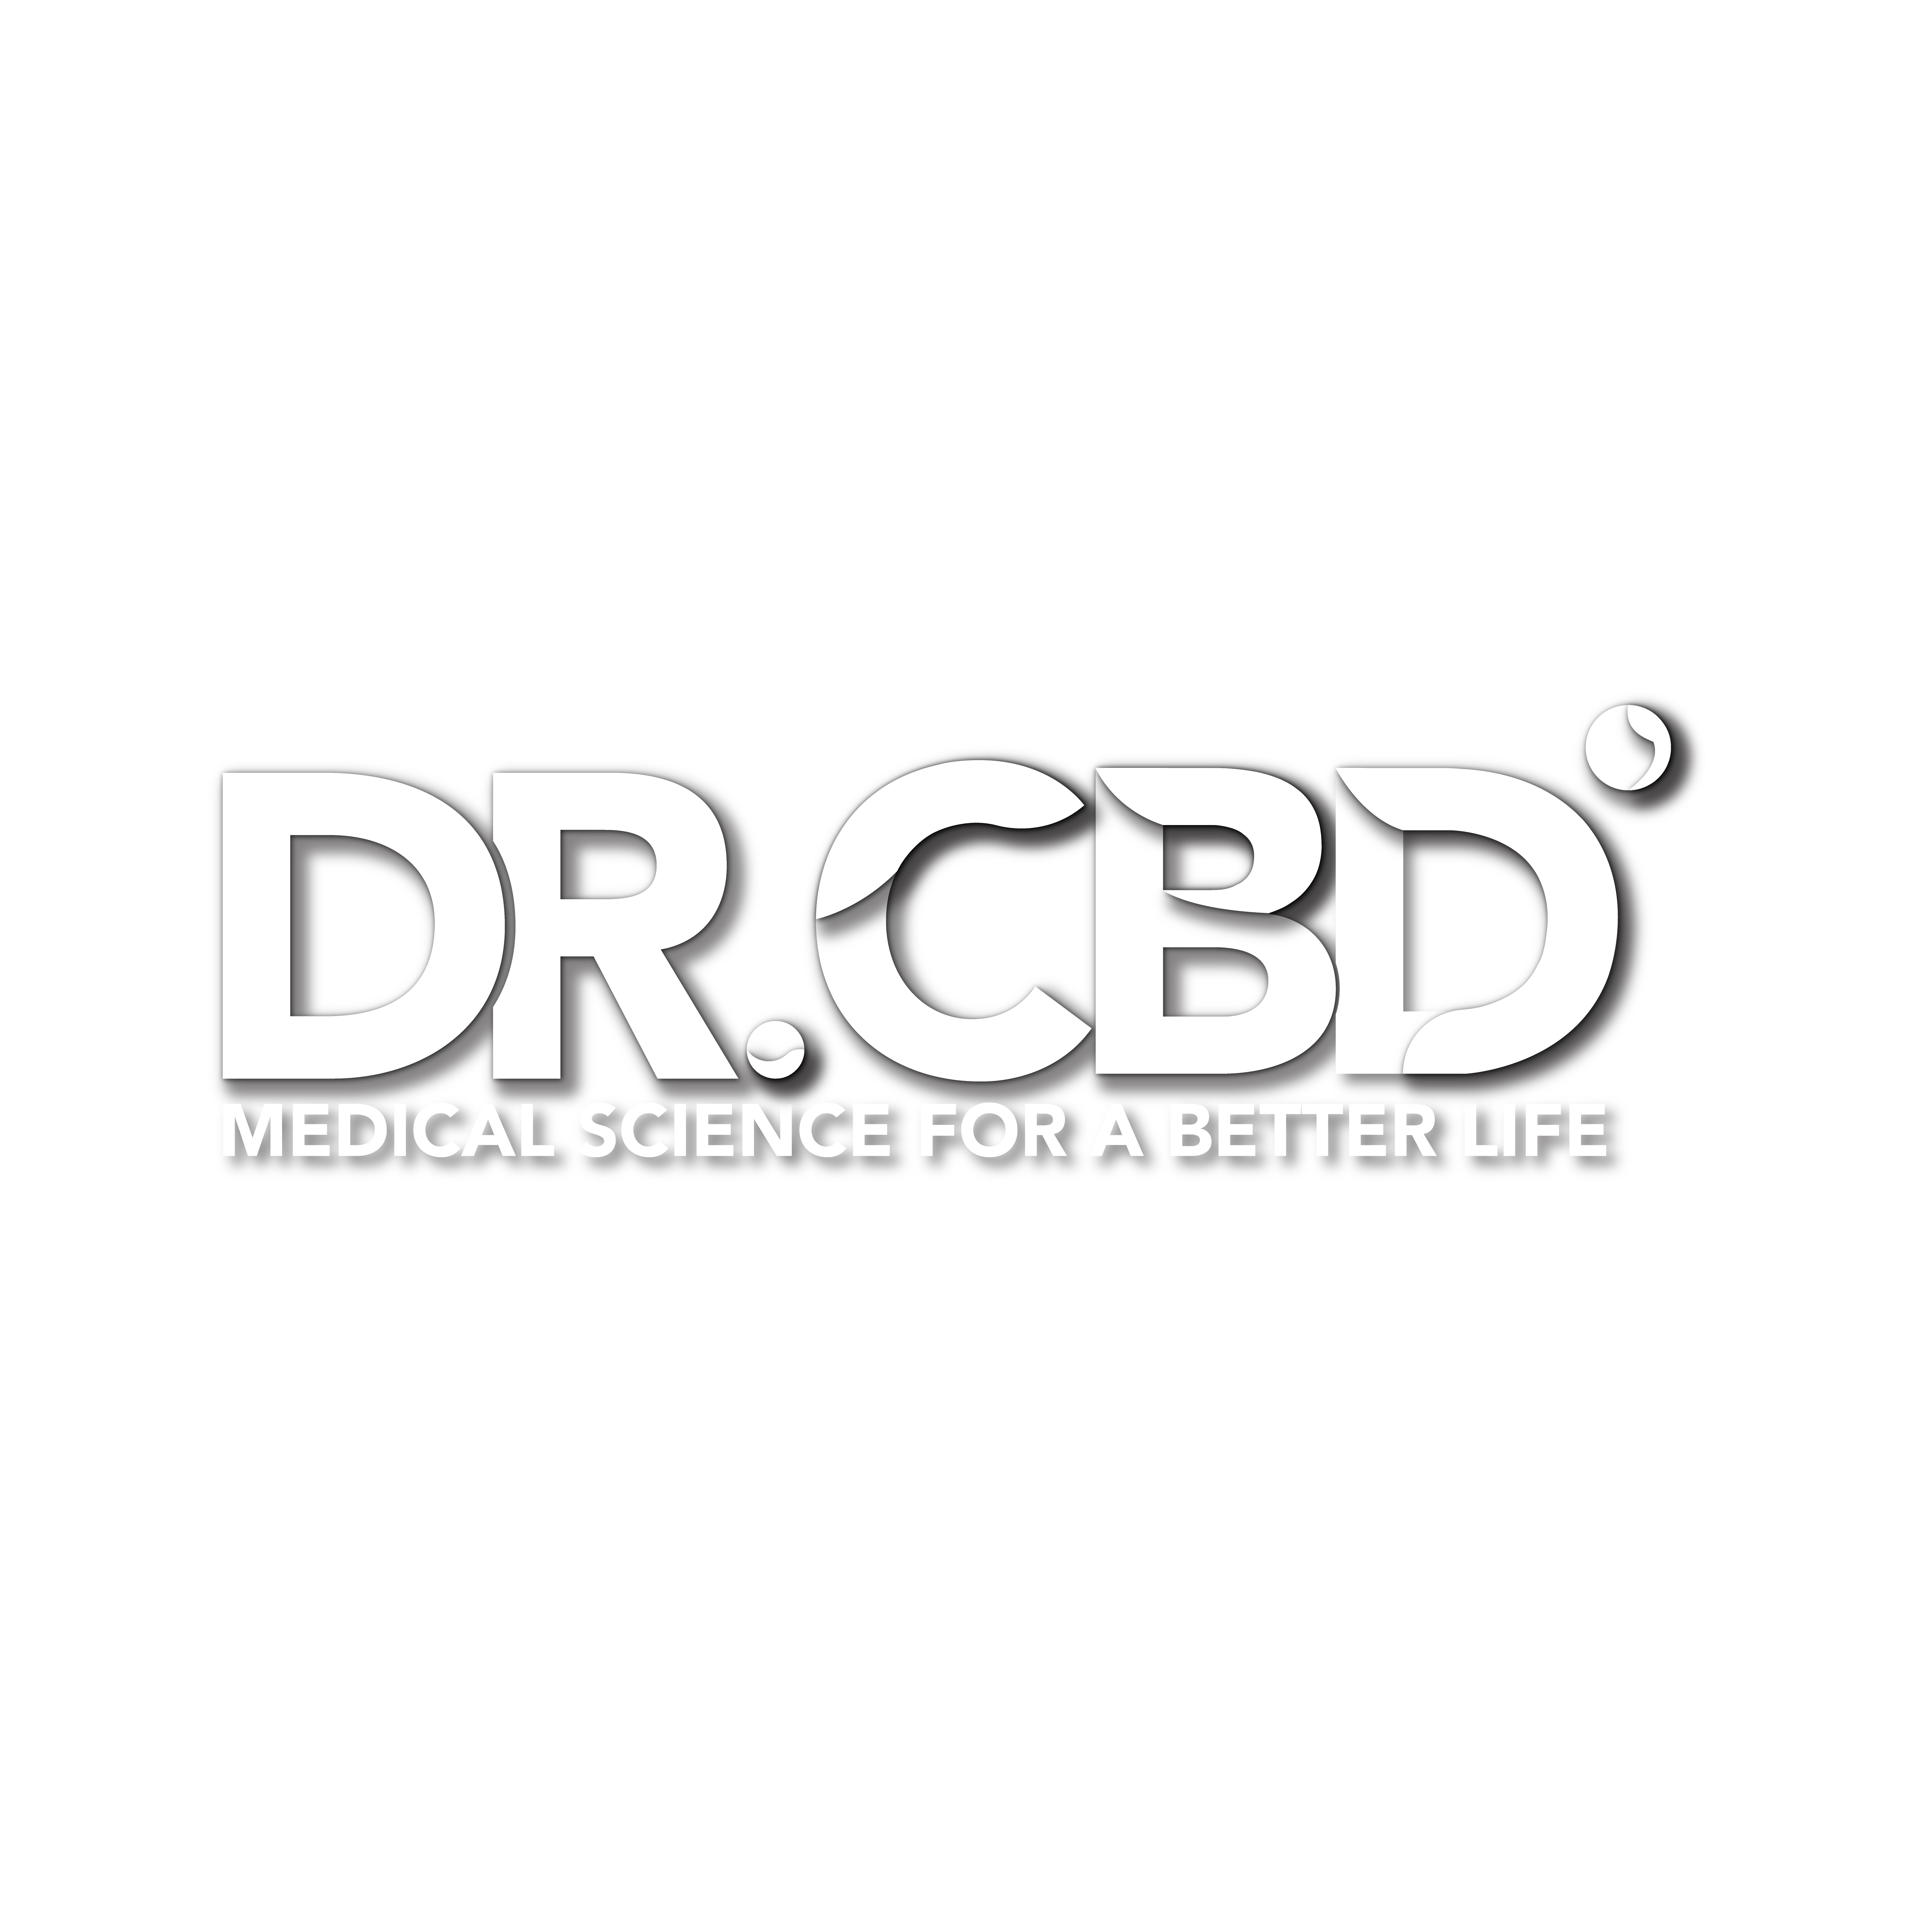 Dr. CBD